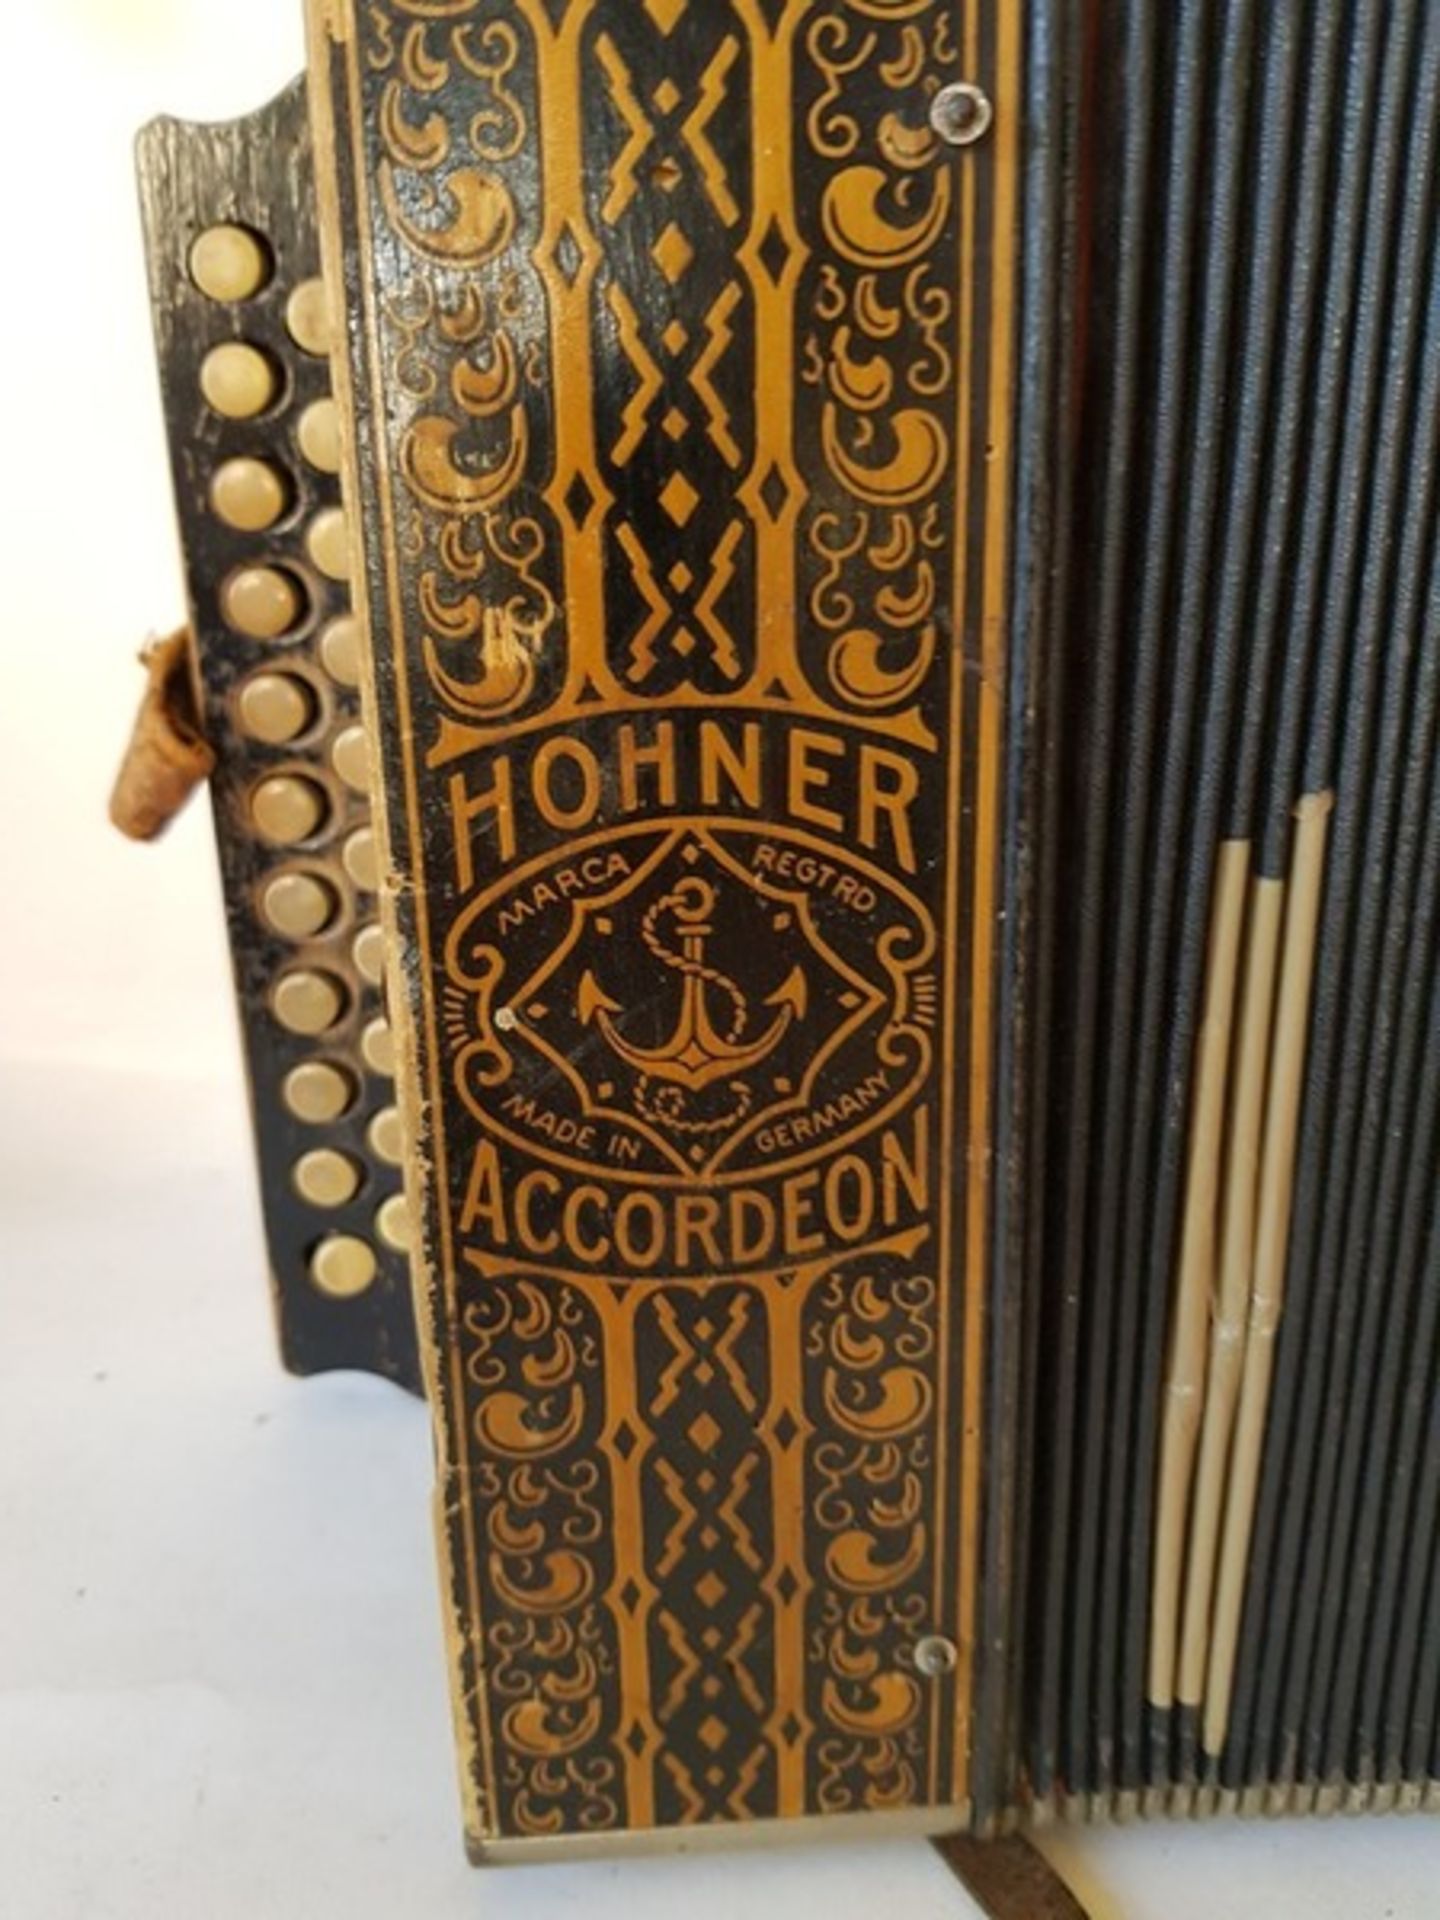 (Muziekinstrumenten) Hohner accordeonHohner accordeon, Marca Registrada, Duitsland, in koffer, circa - Bild 5 aus 5